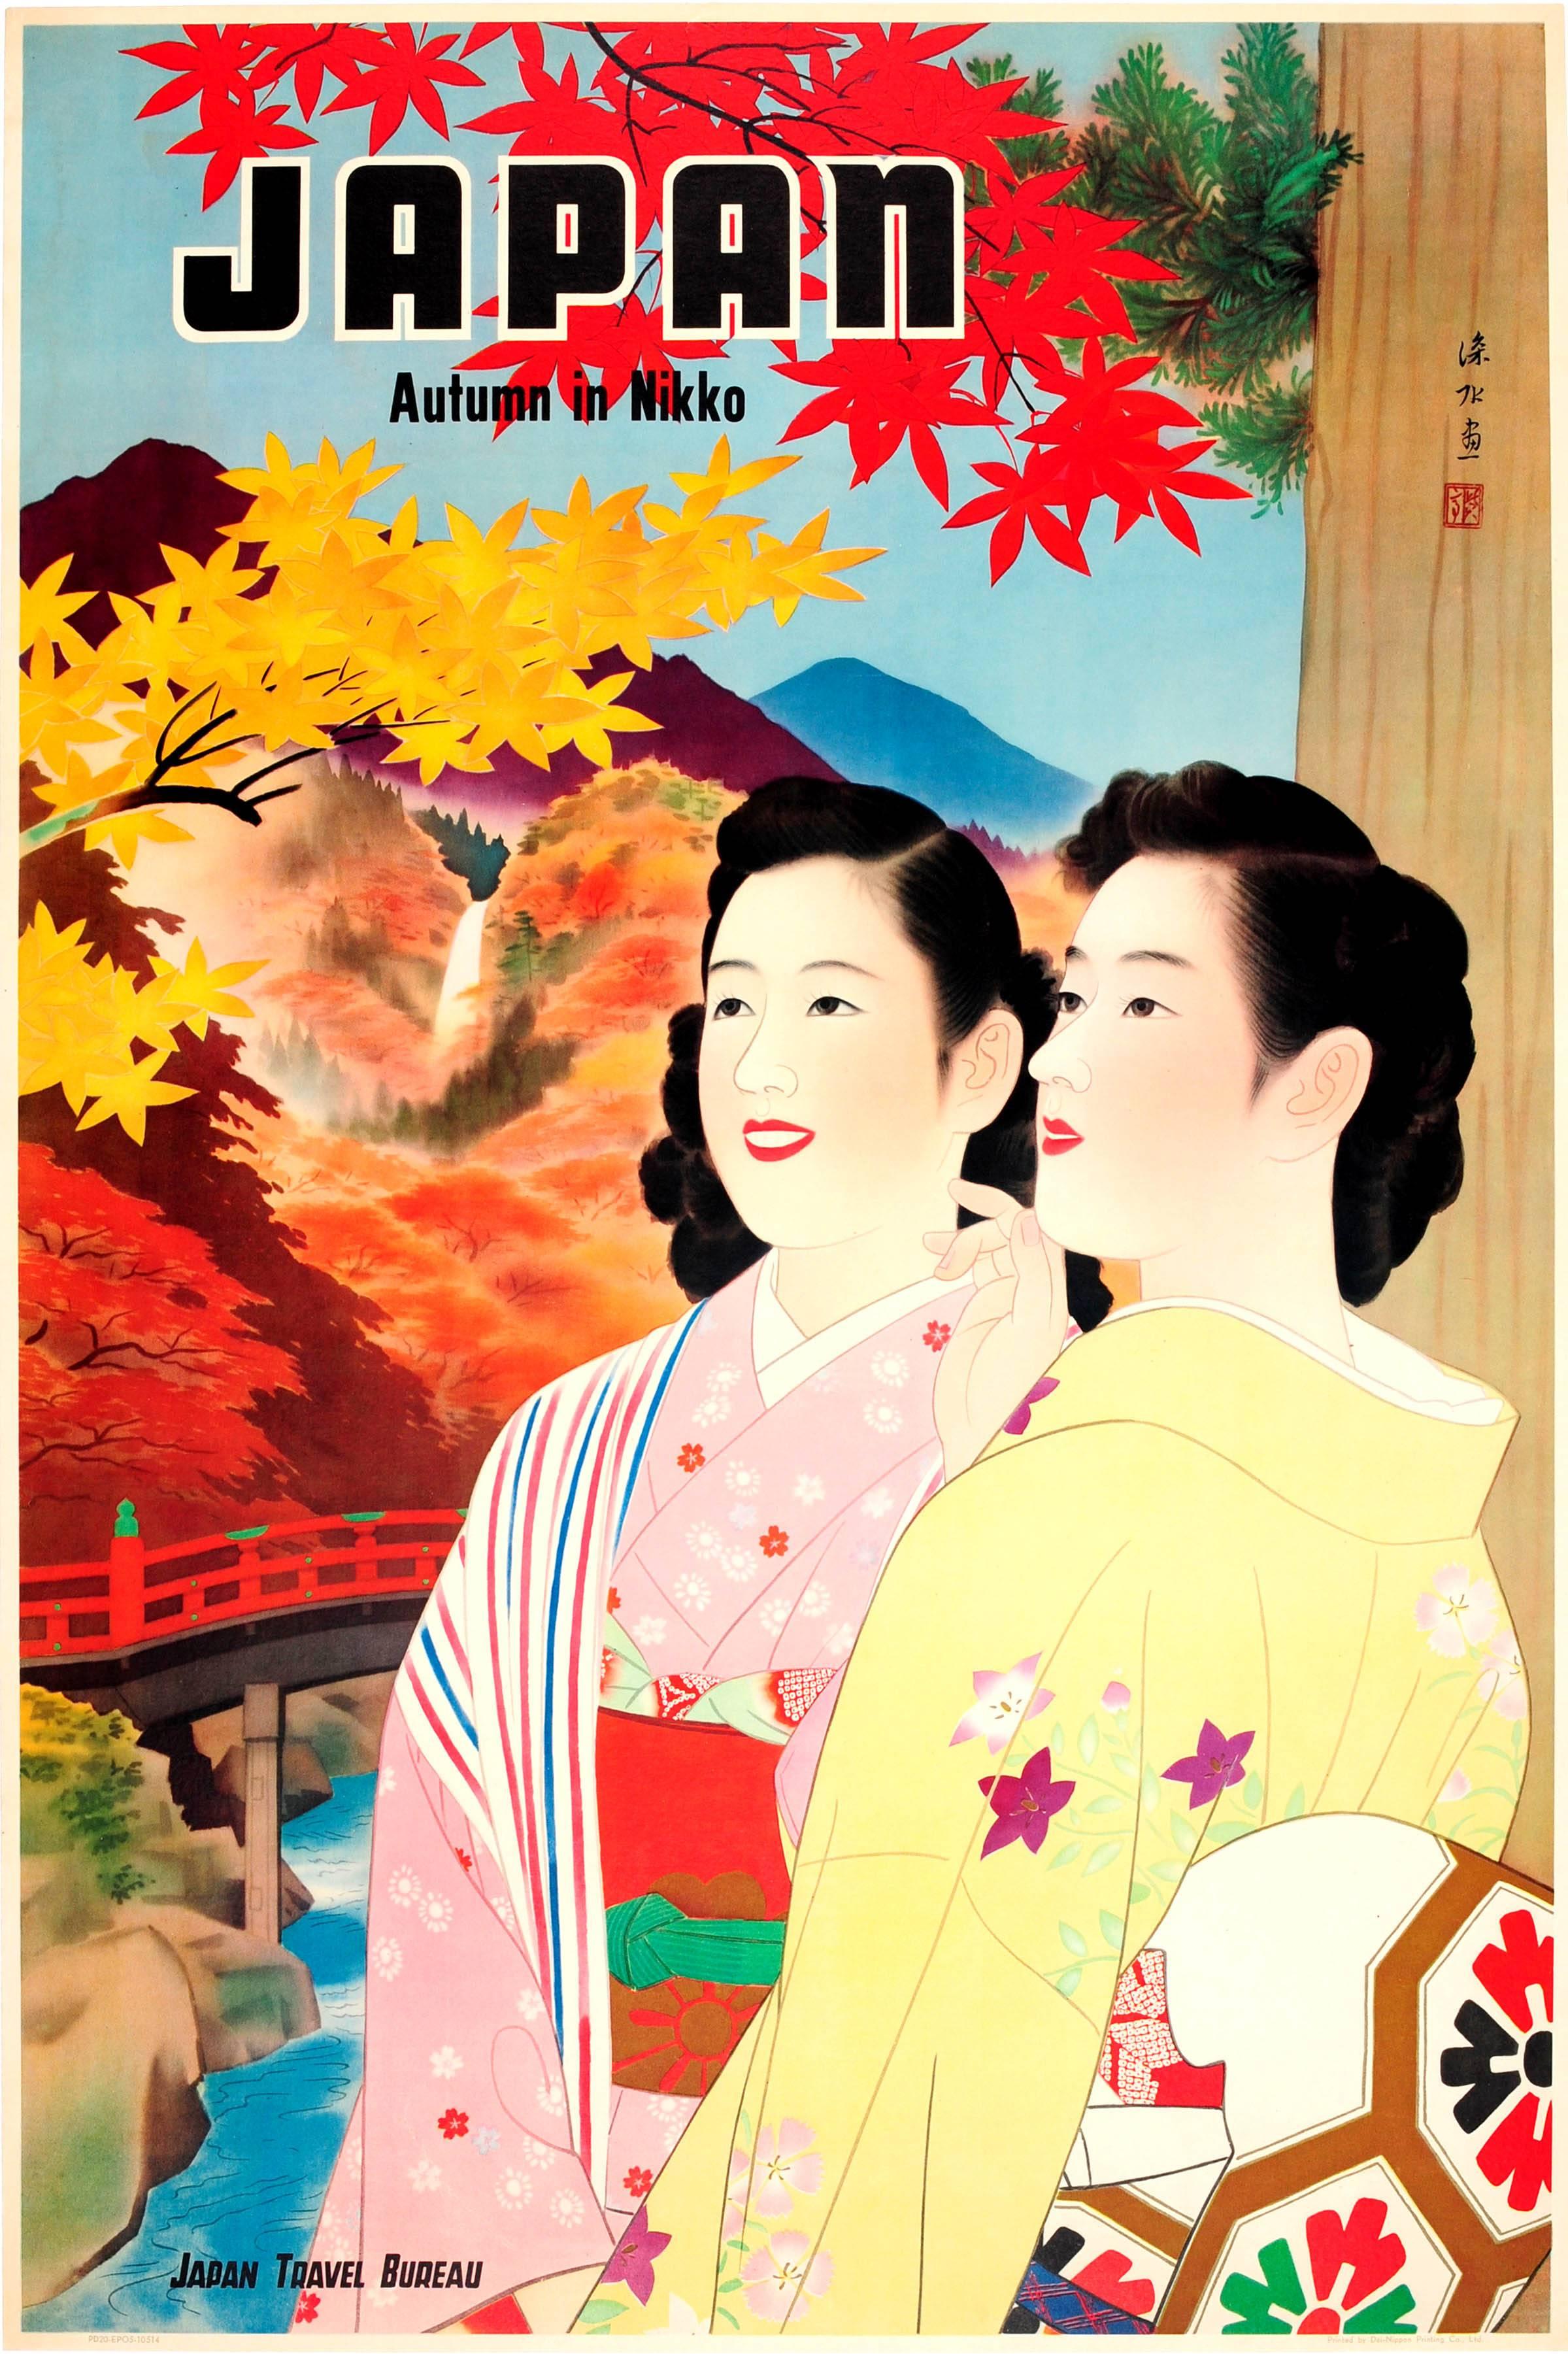 Unknown Print - Original Vintage 1930s Travel Advertising Poster For Japan - Autumn In Nikko